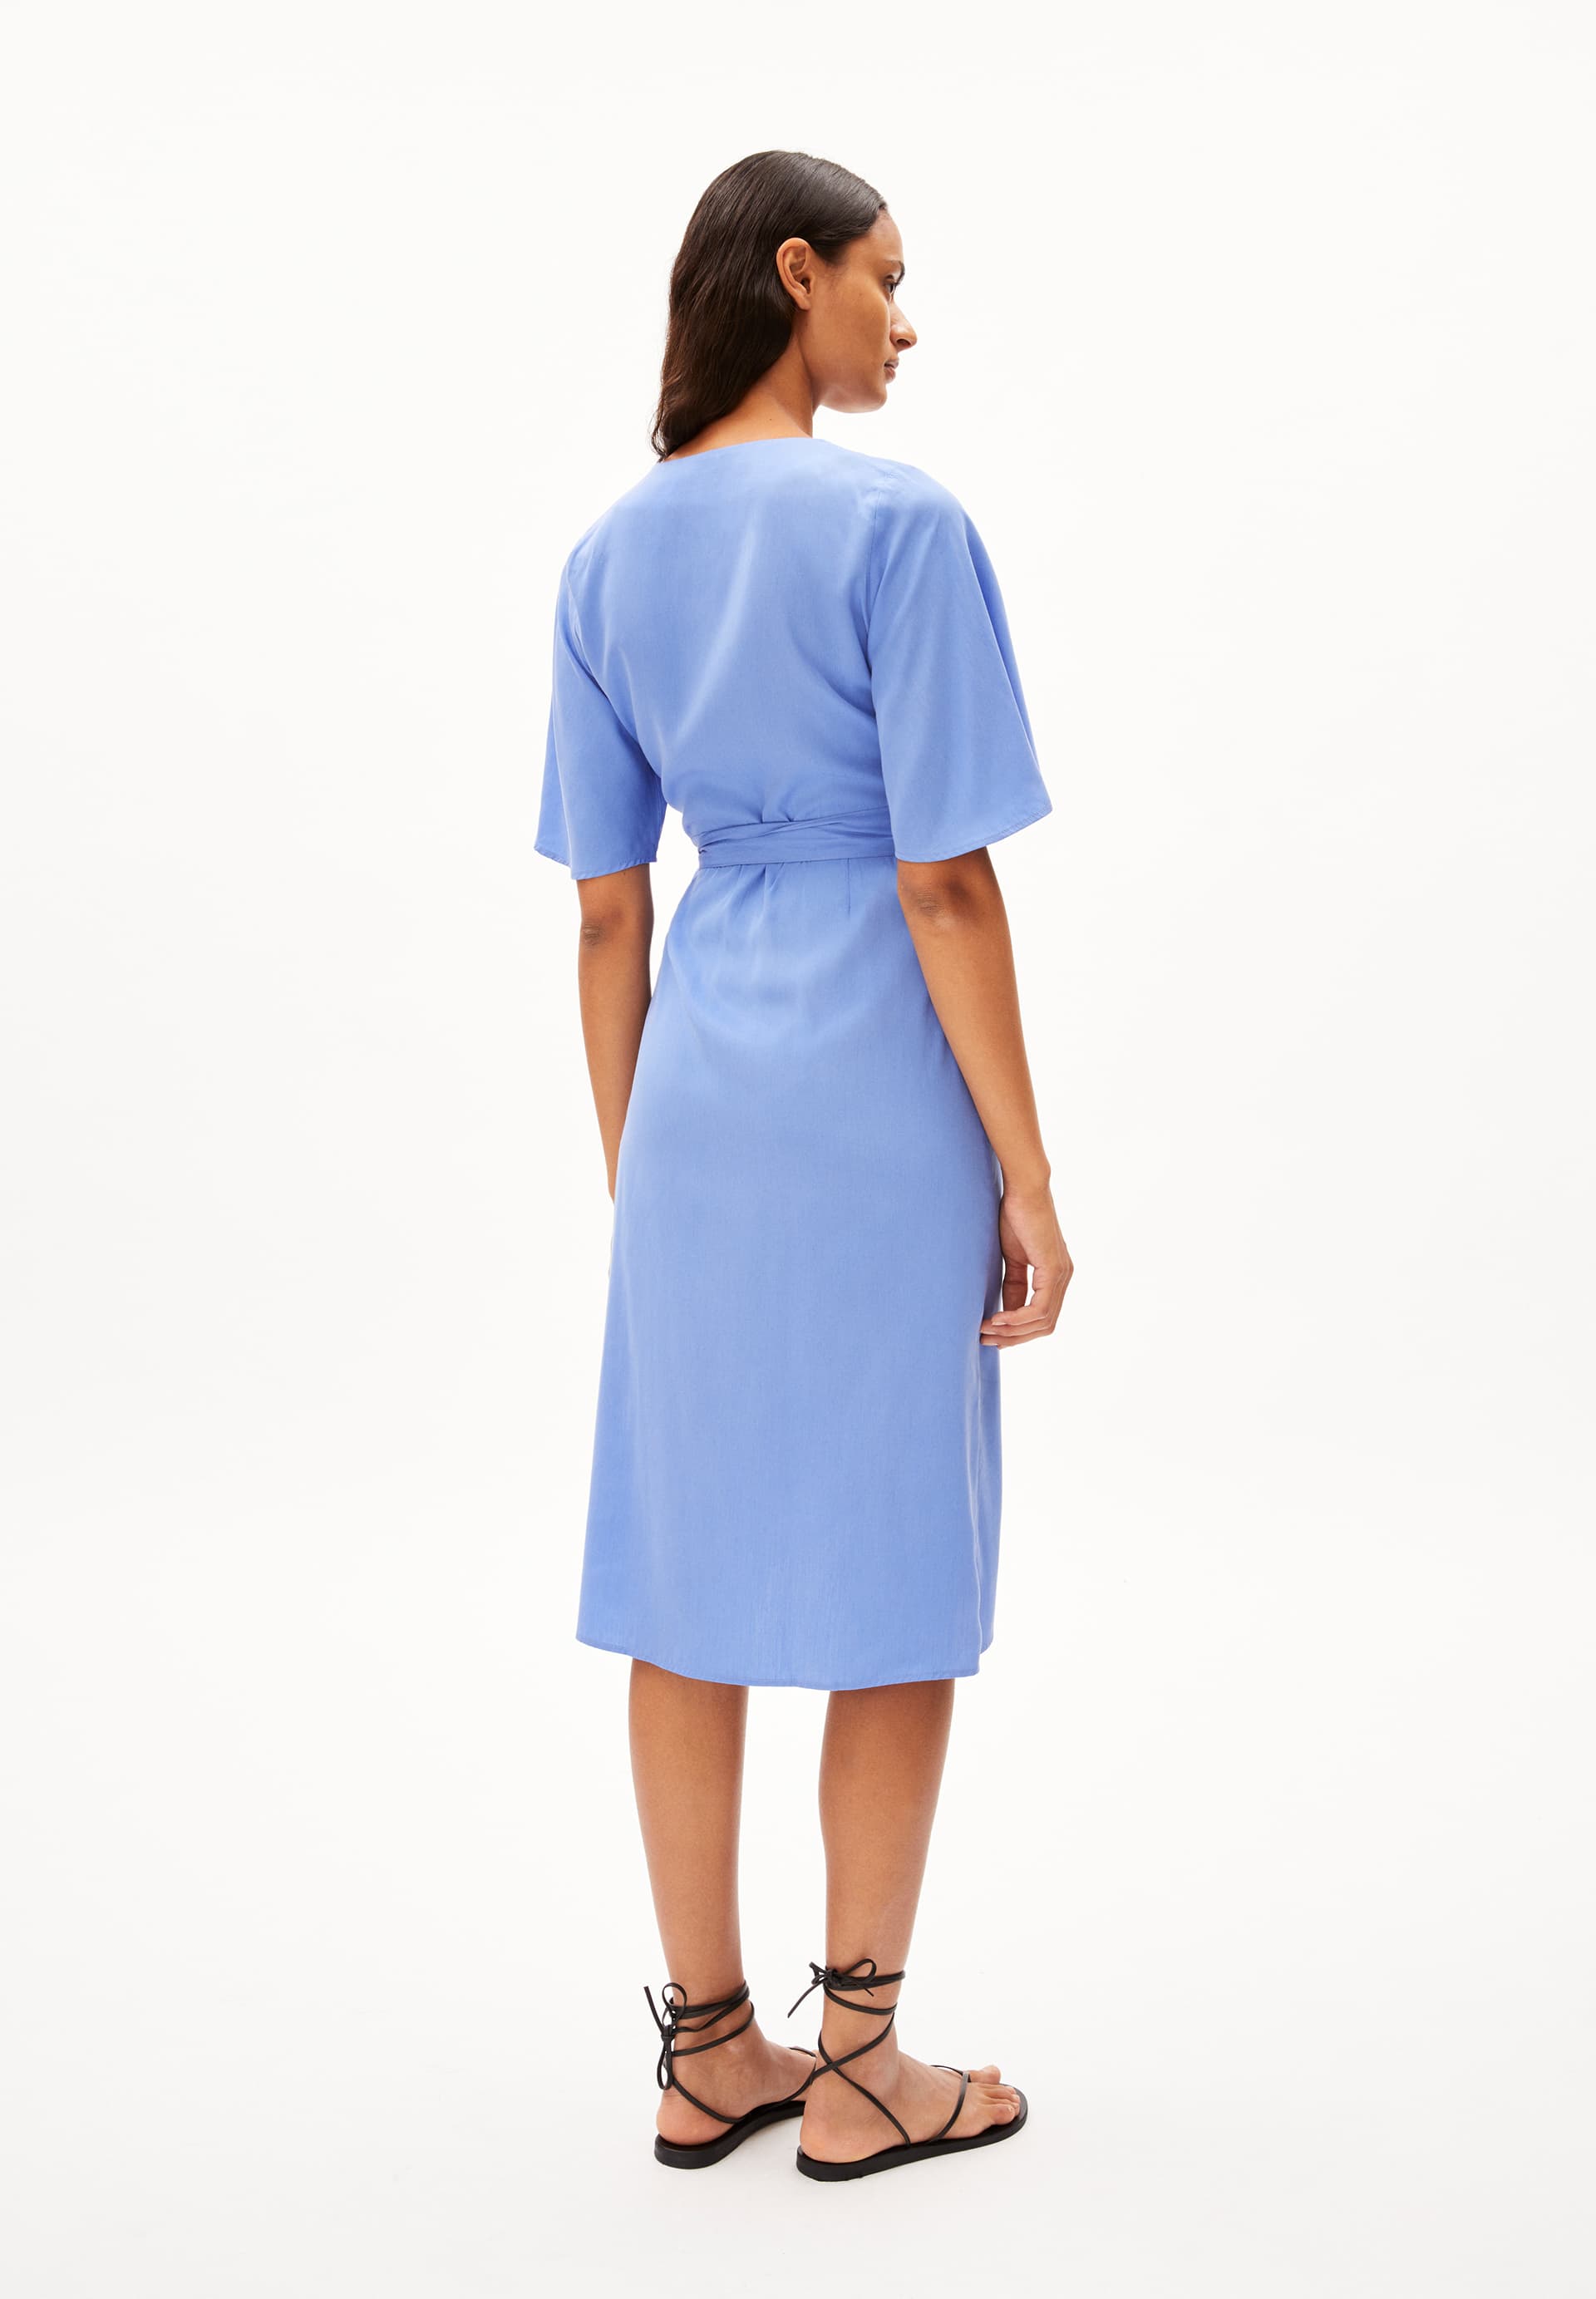 NATAALE Woven Dress Regular Fit made of TENCEL™ Lyocell Mix